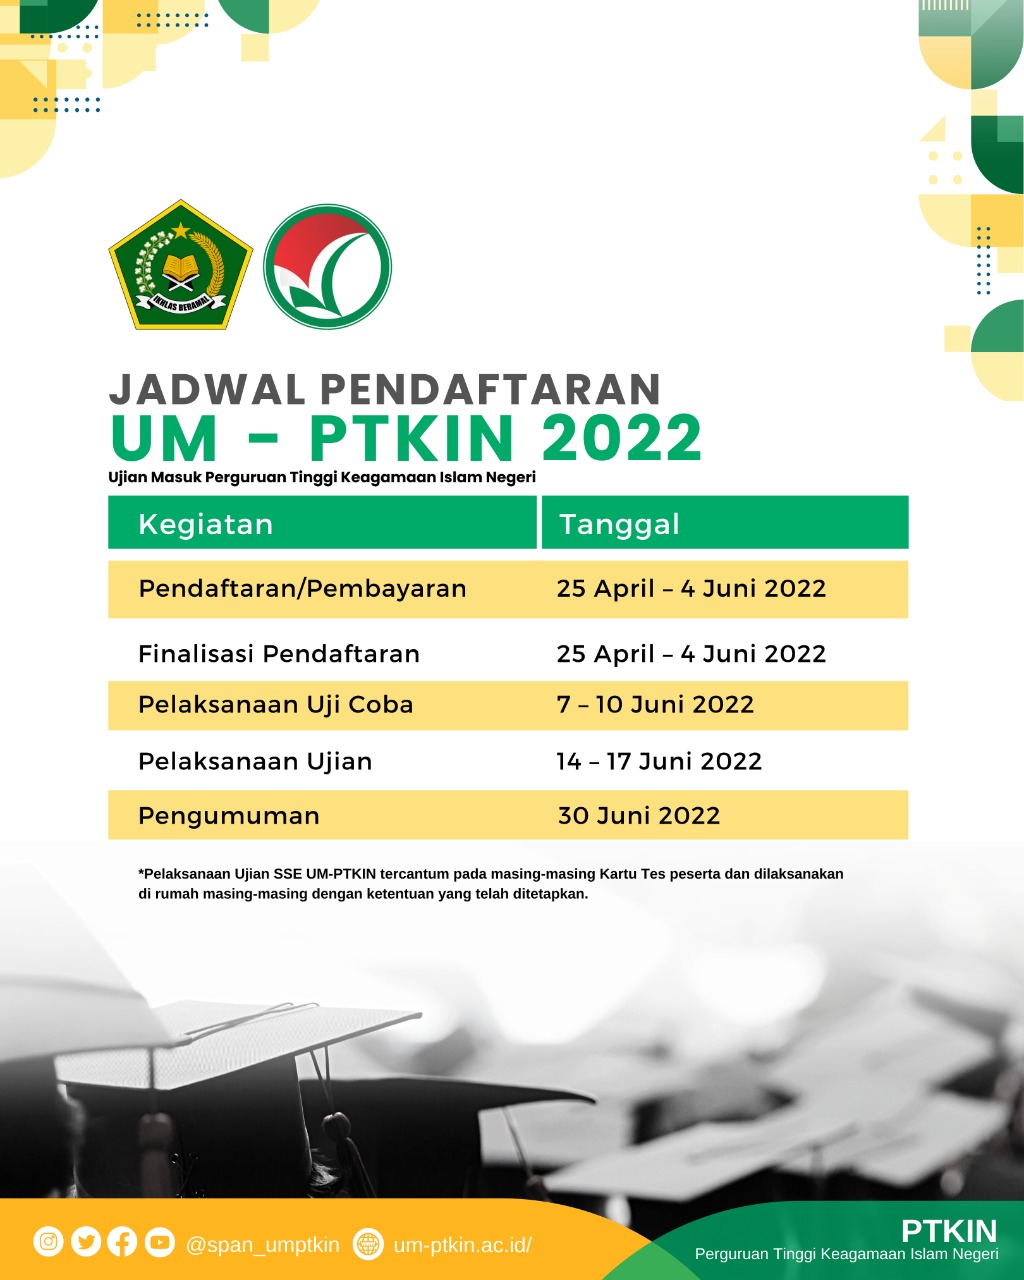 Pendaftaran UM-PTKIN 2022 telah dibuka, berikut syarat dan cara pendaftarannya